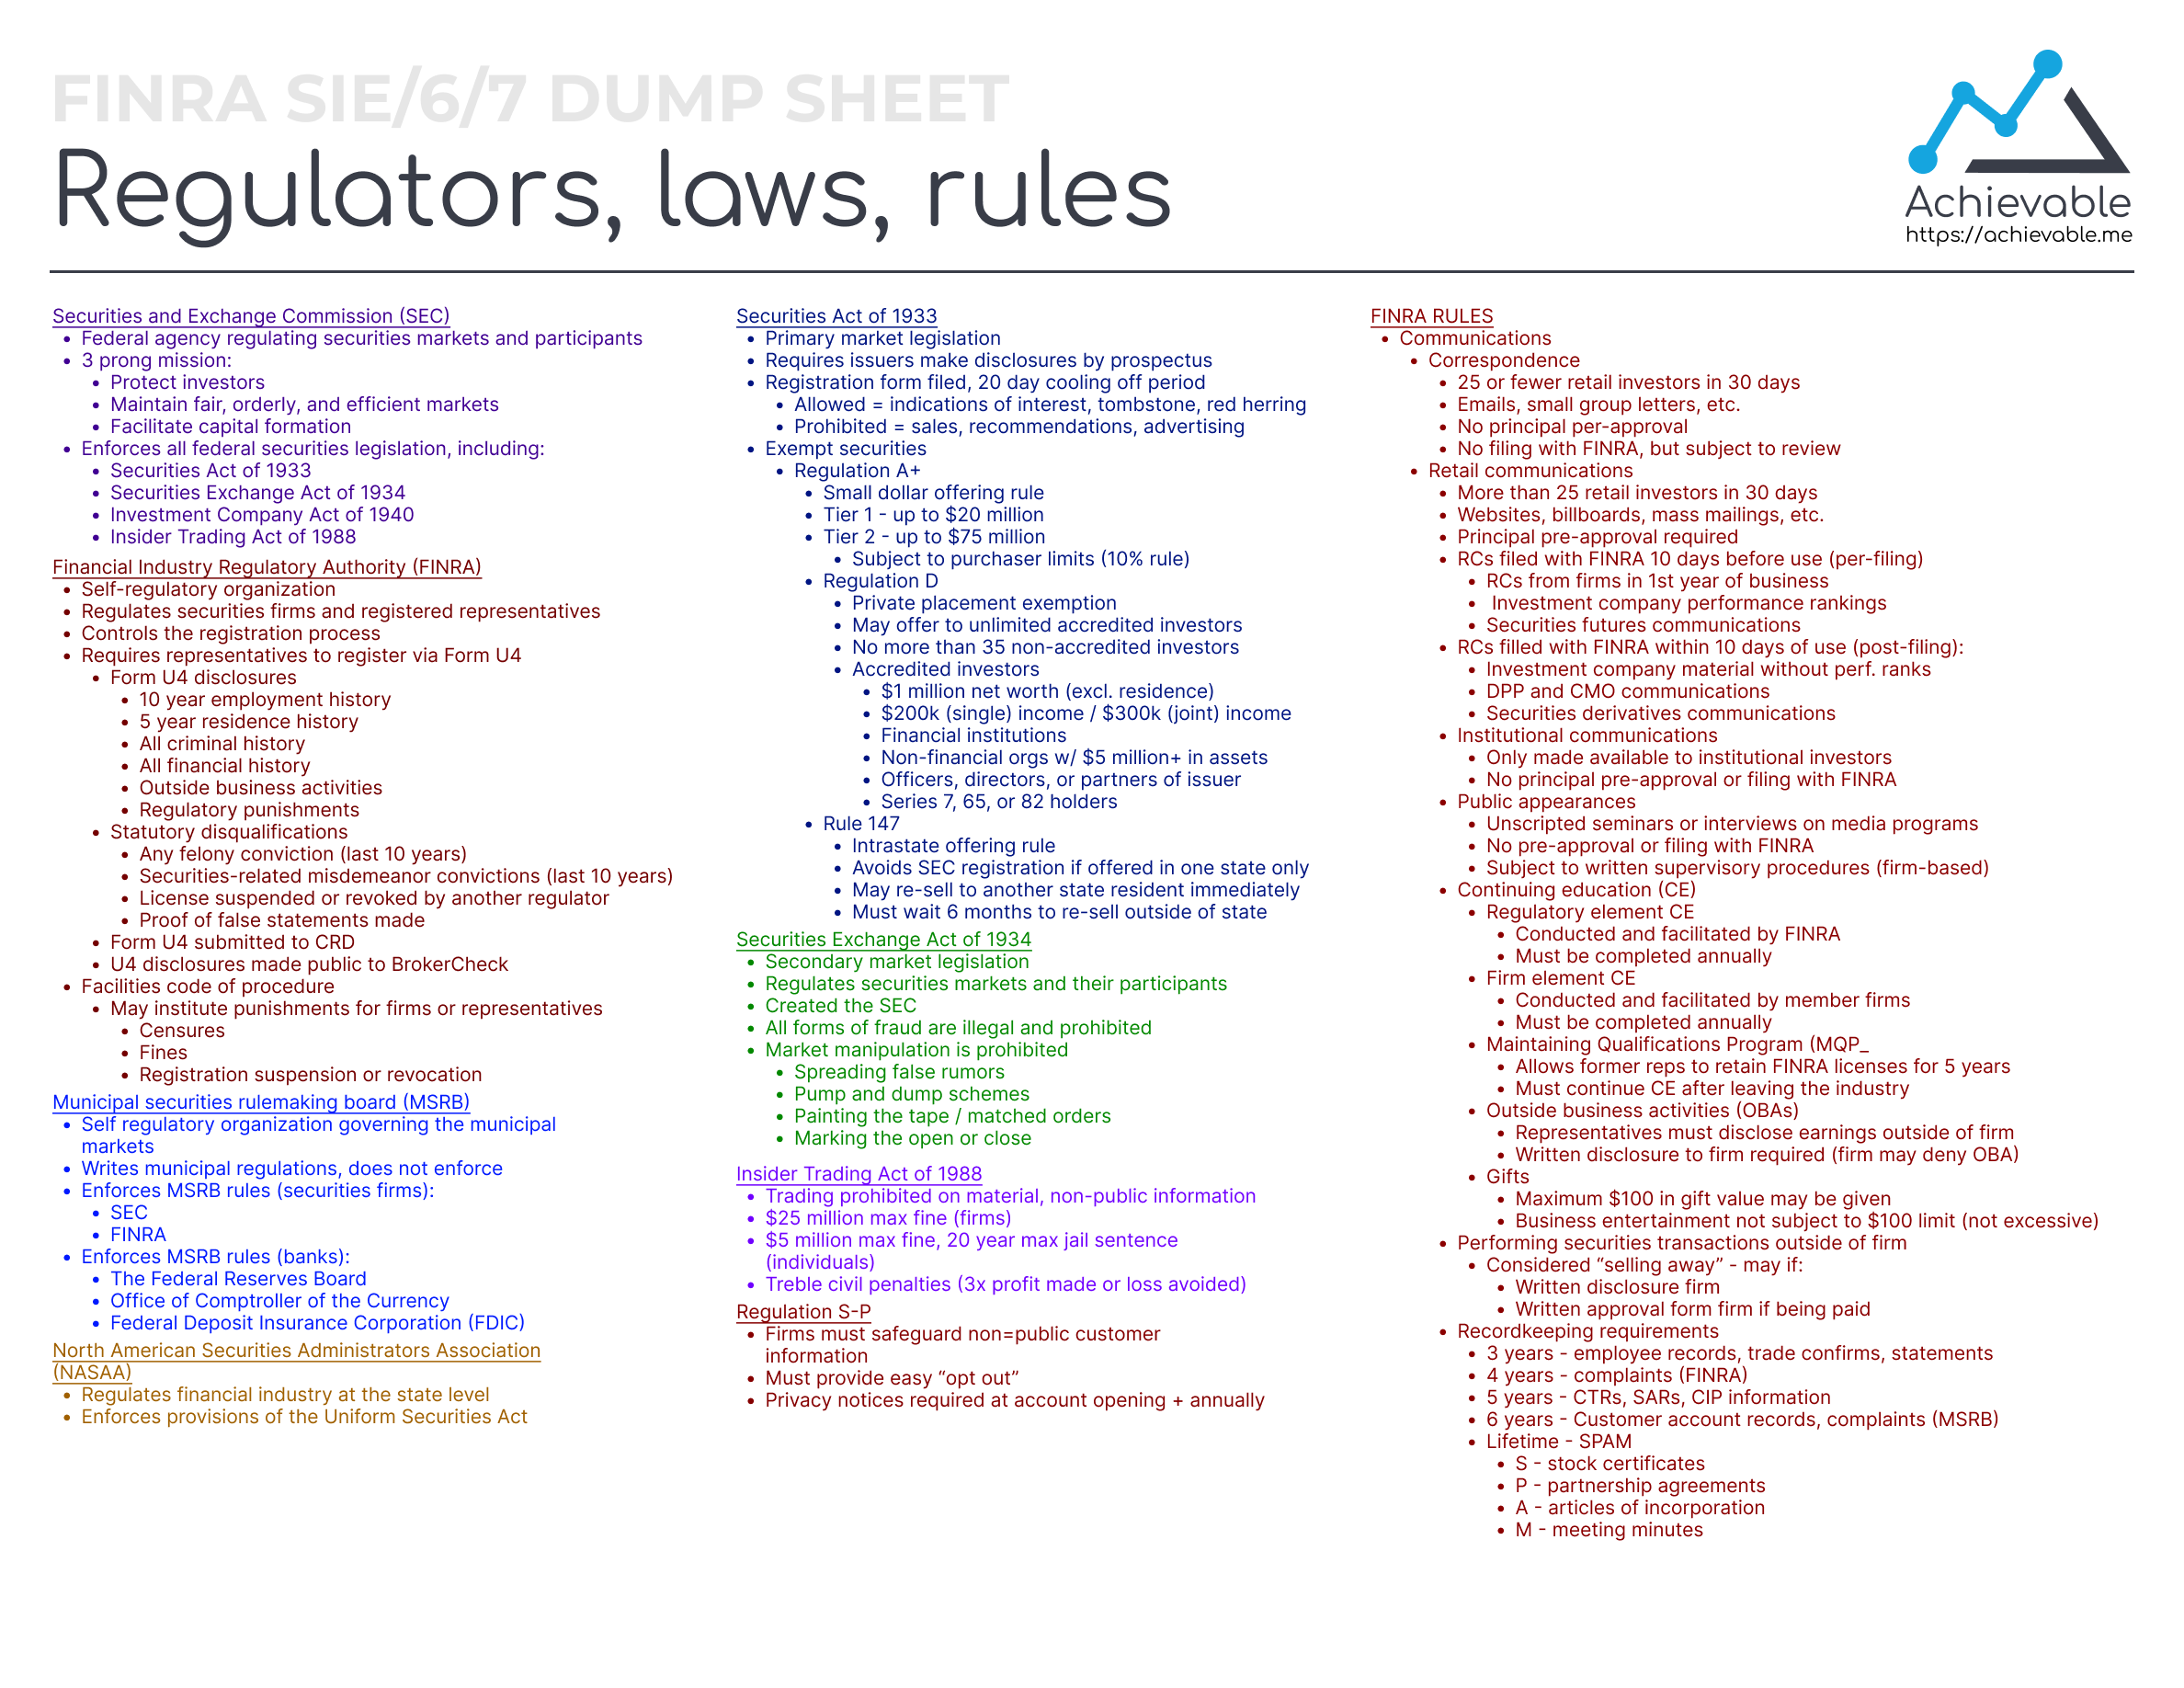 SIE Exam Dump Sheet - Regulators, Laws, and Rules